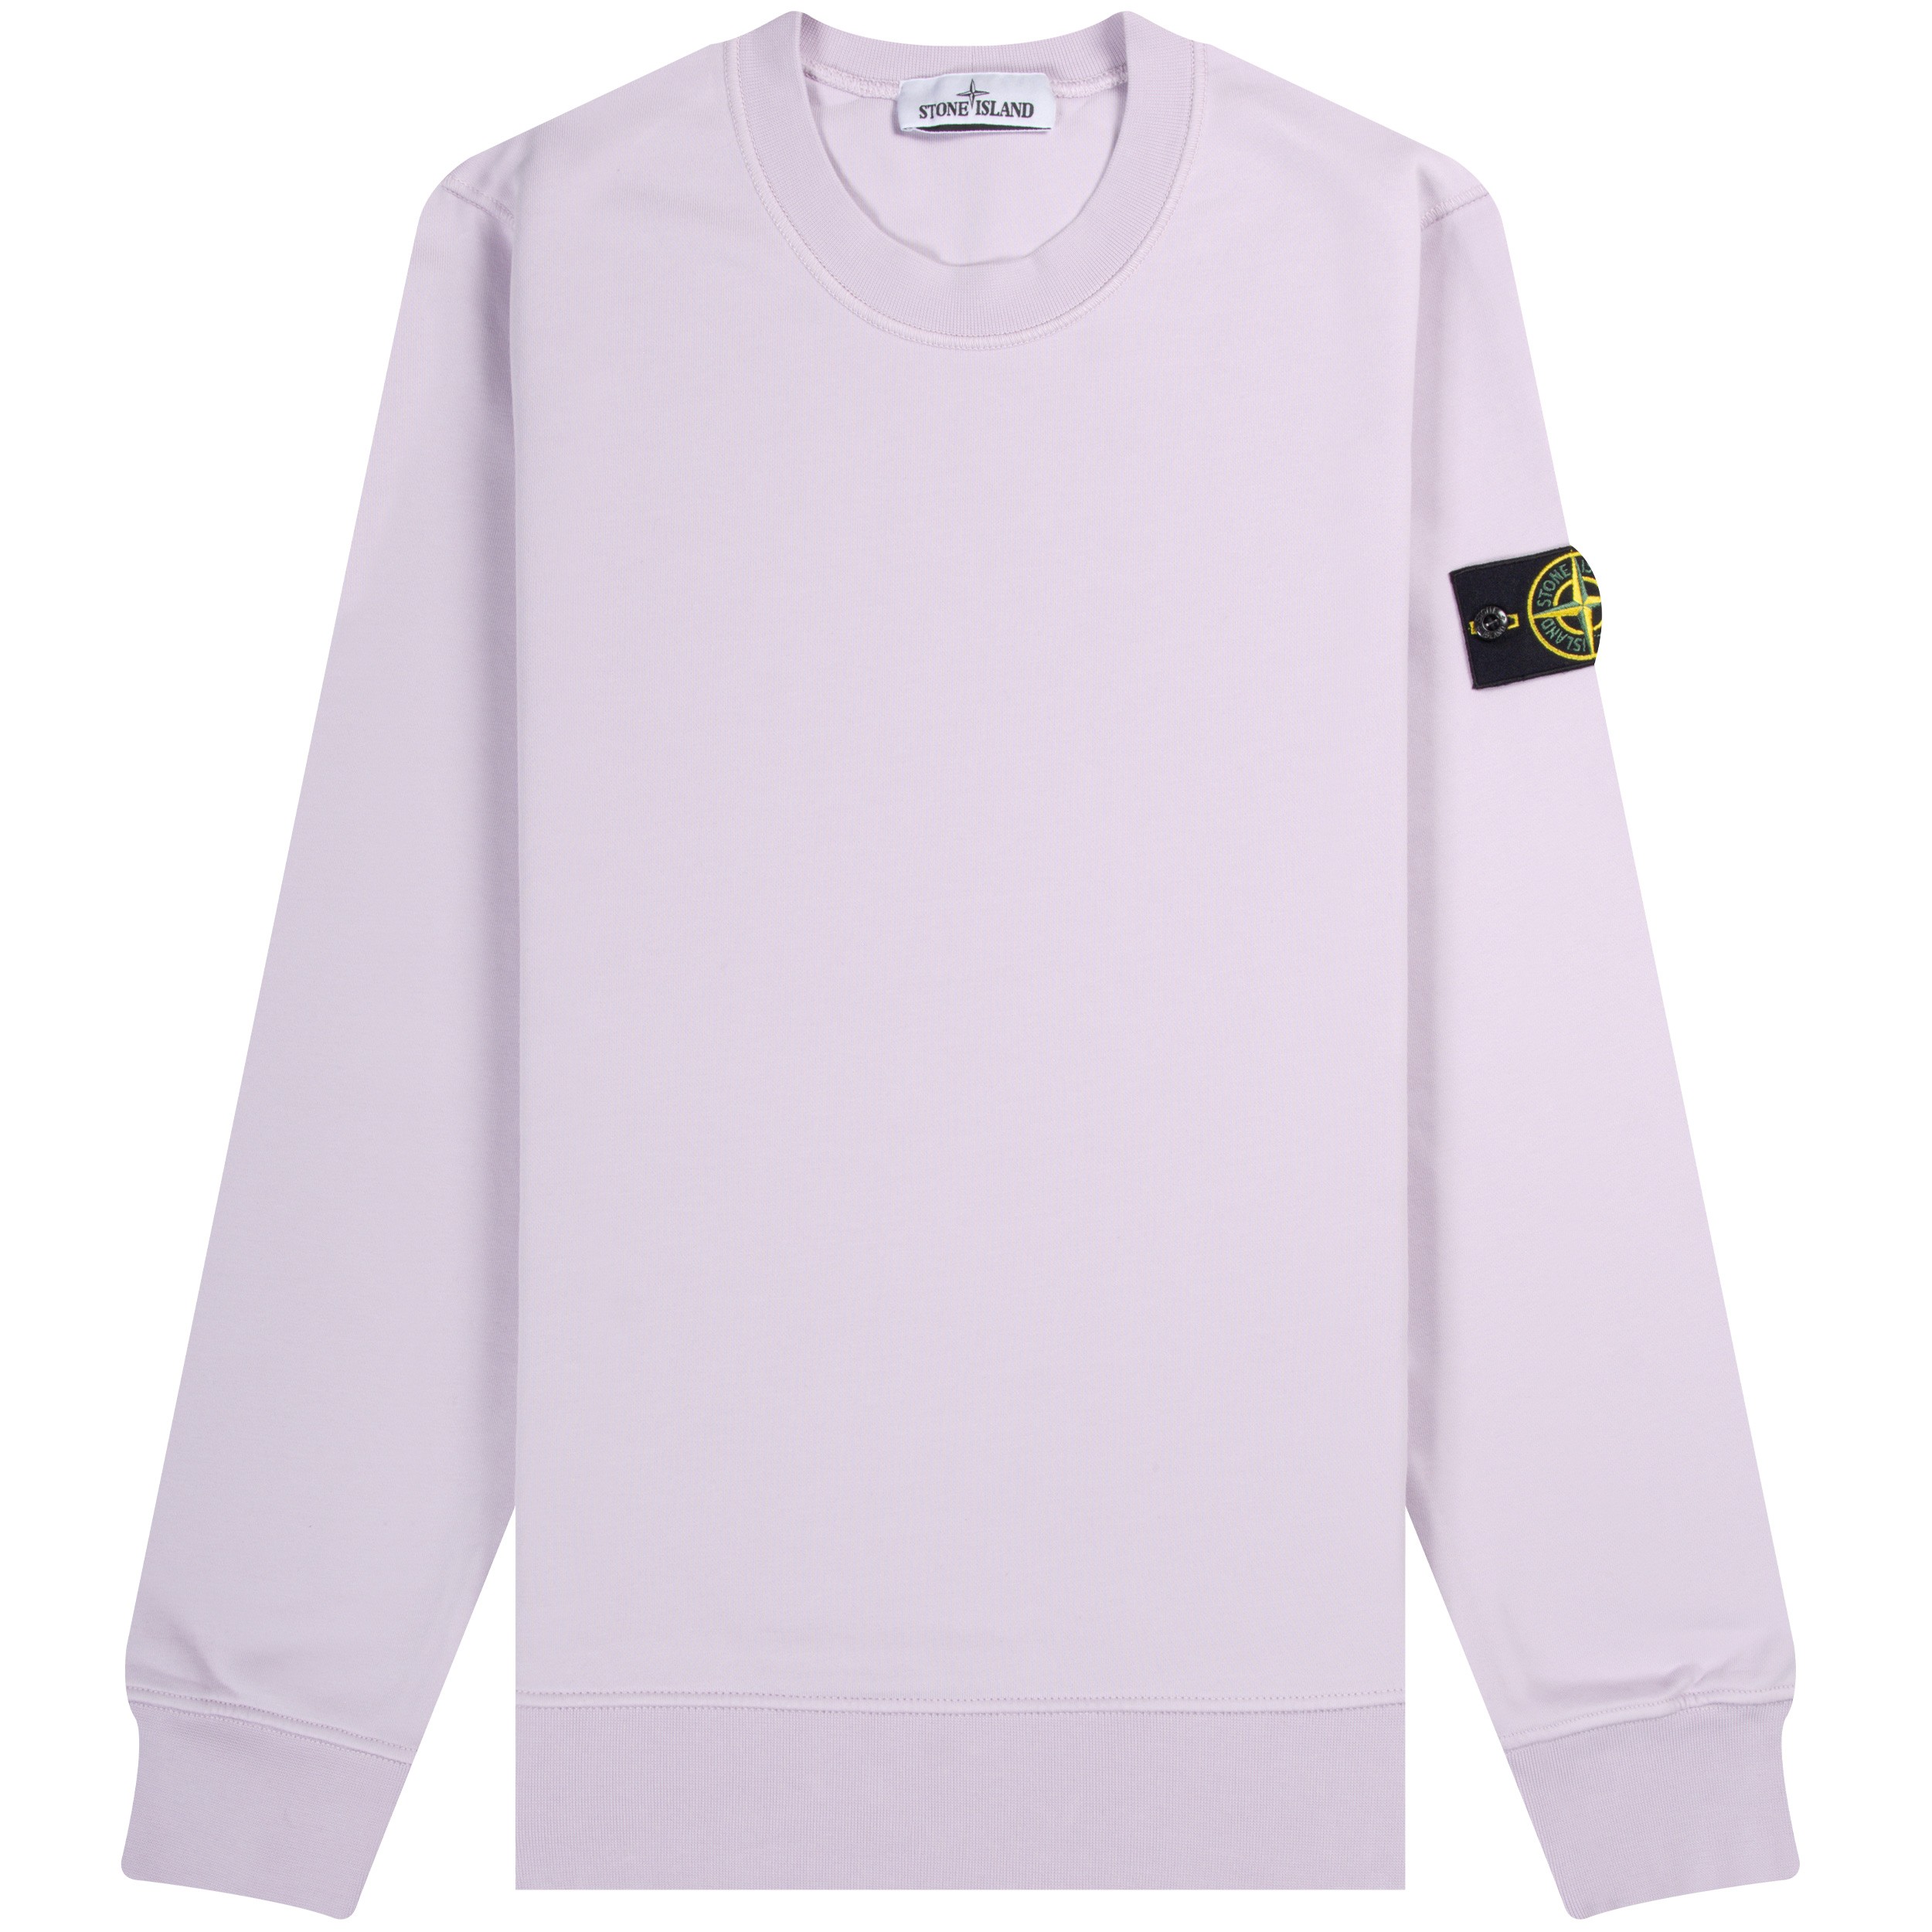 Stone Island 'Crew Neck' Sweatshirt Rose Quartz